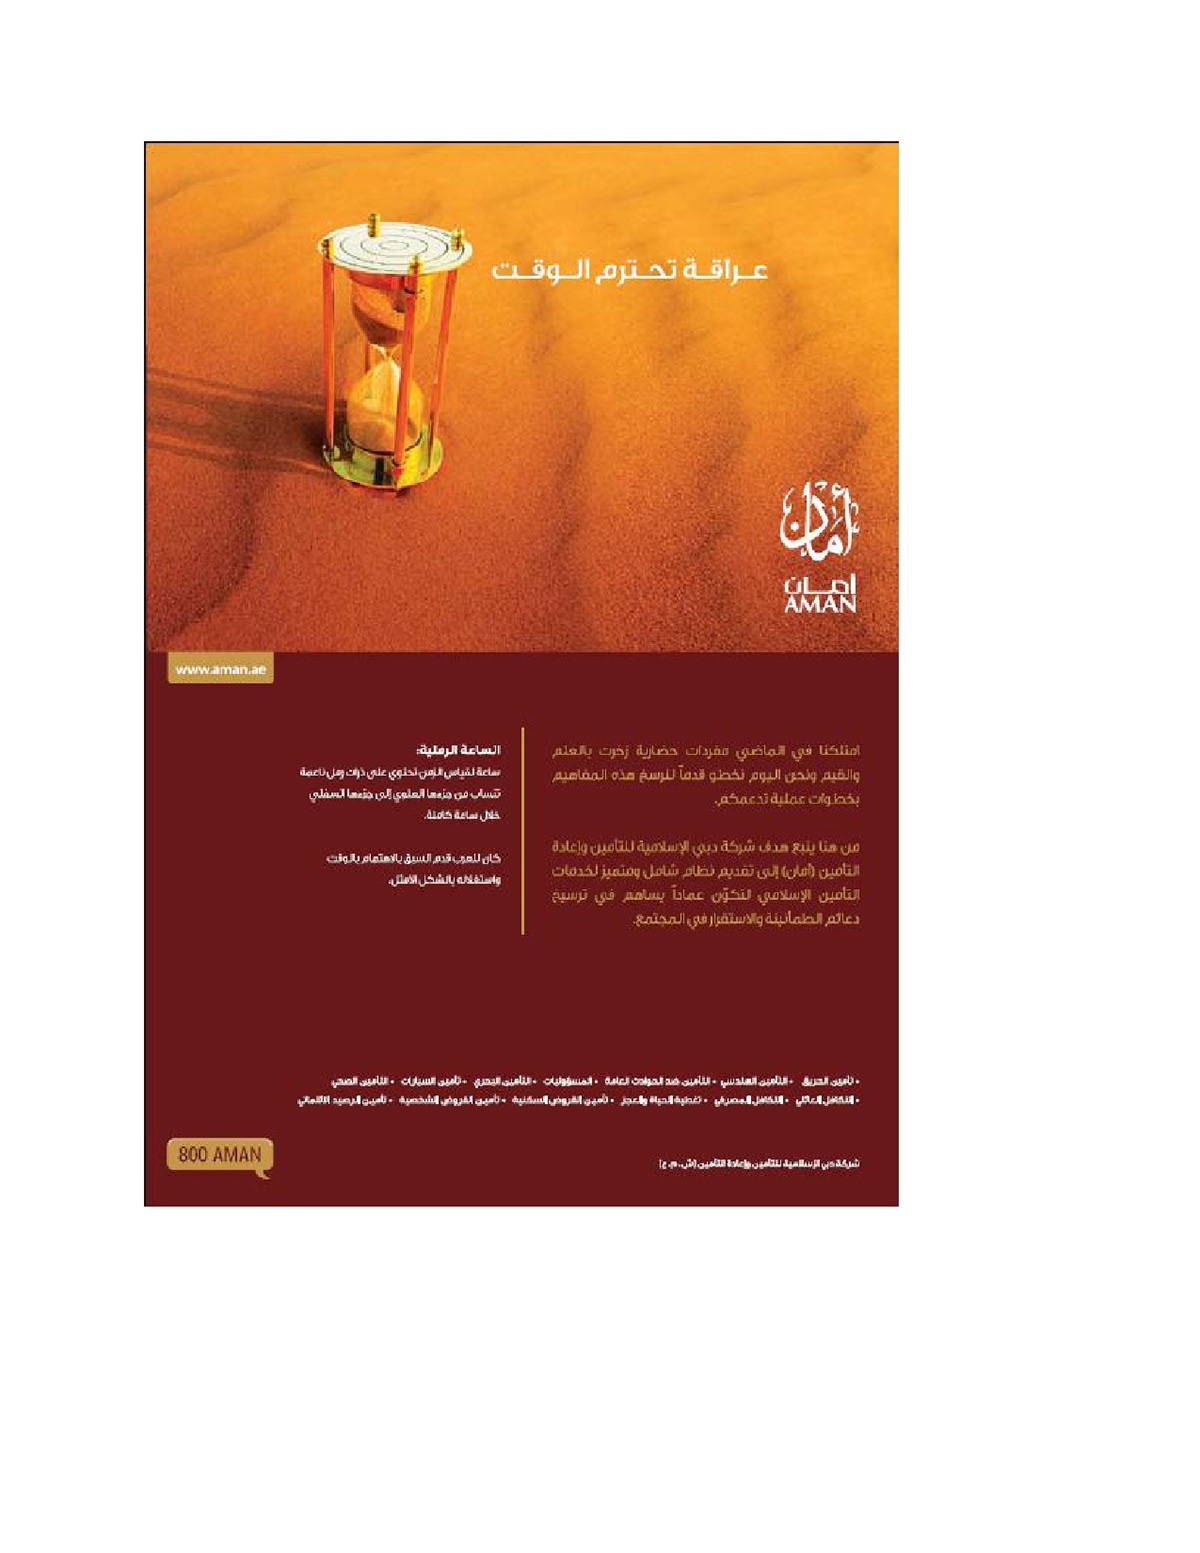 Website  text content translation arabic creative technical